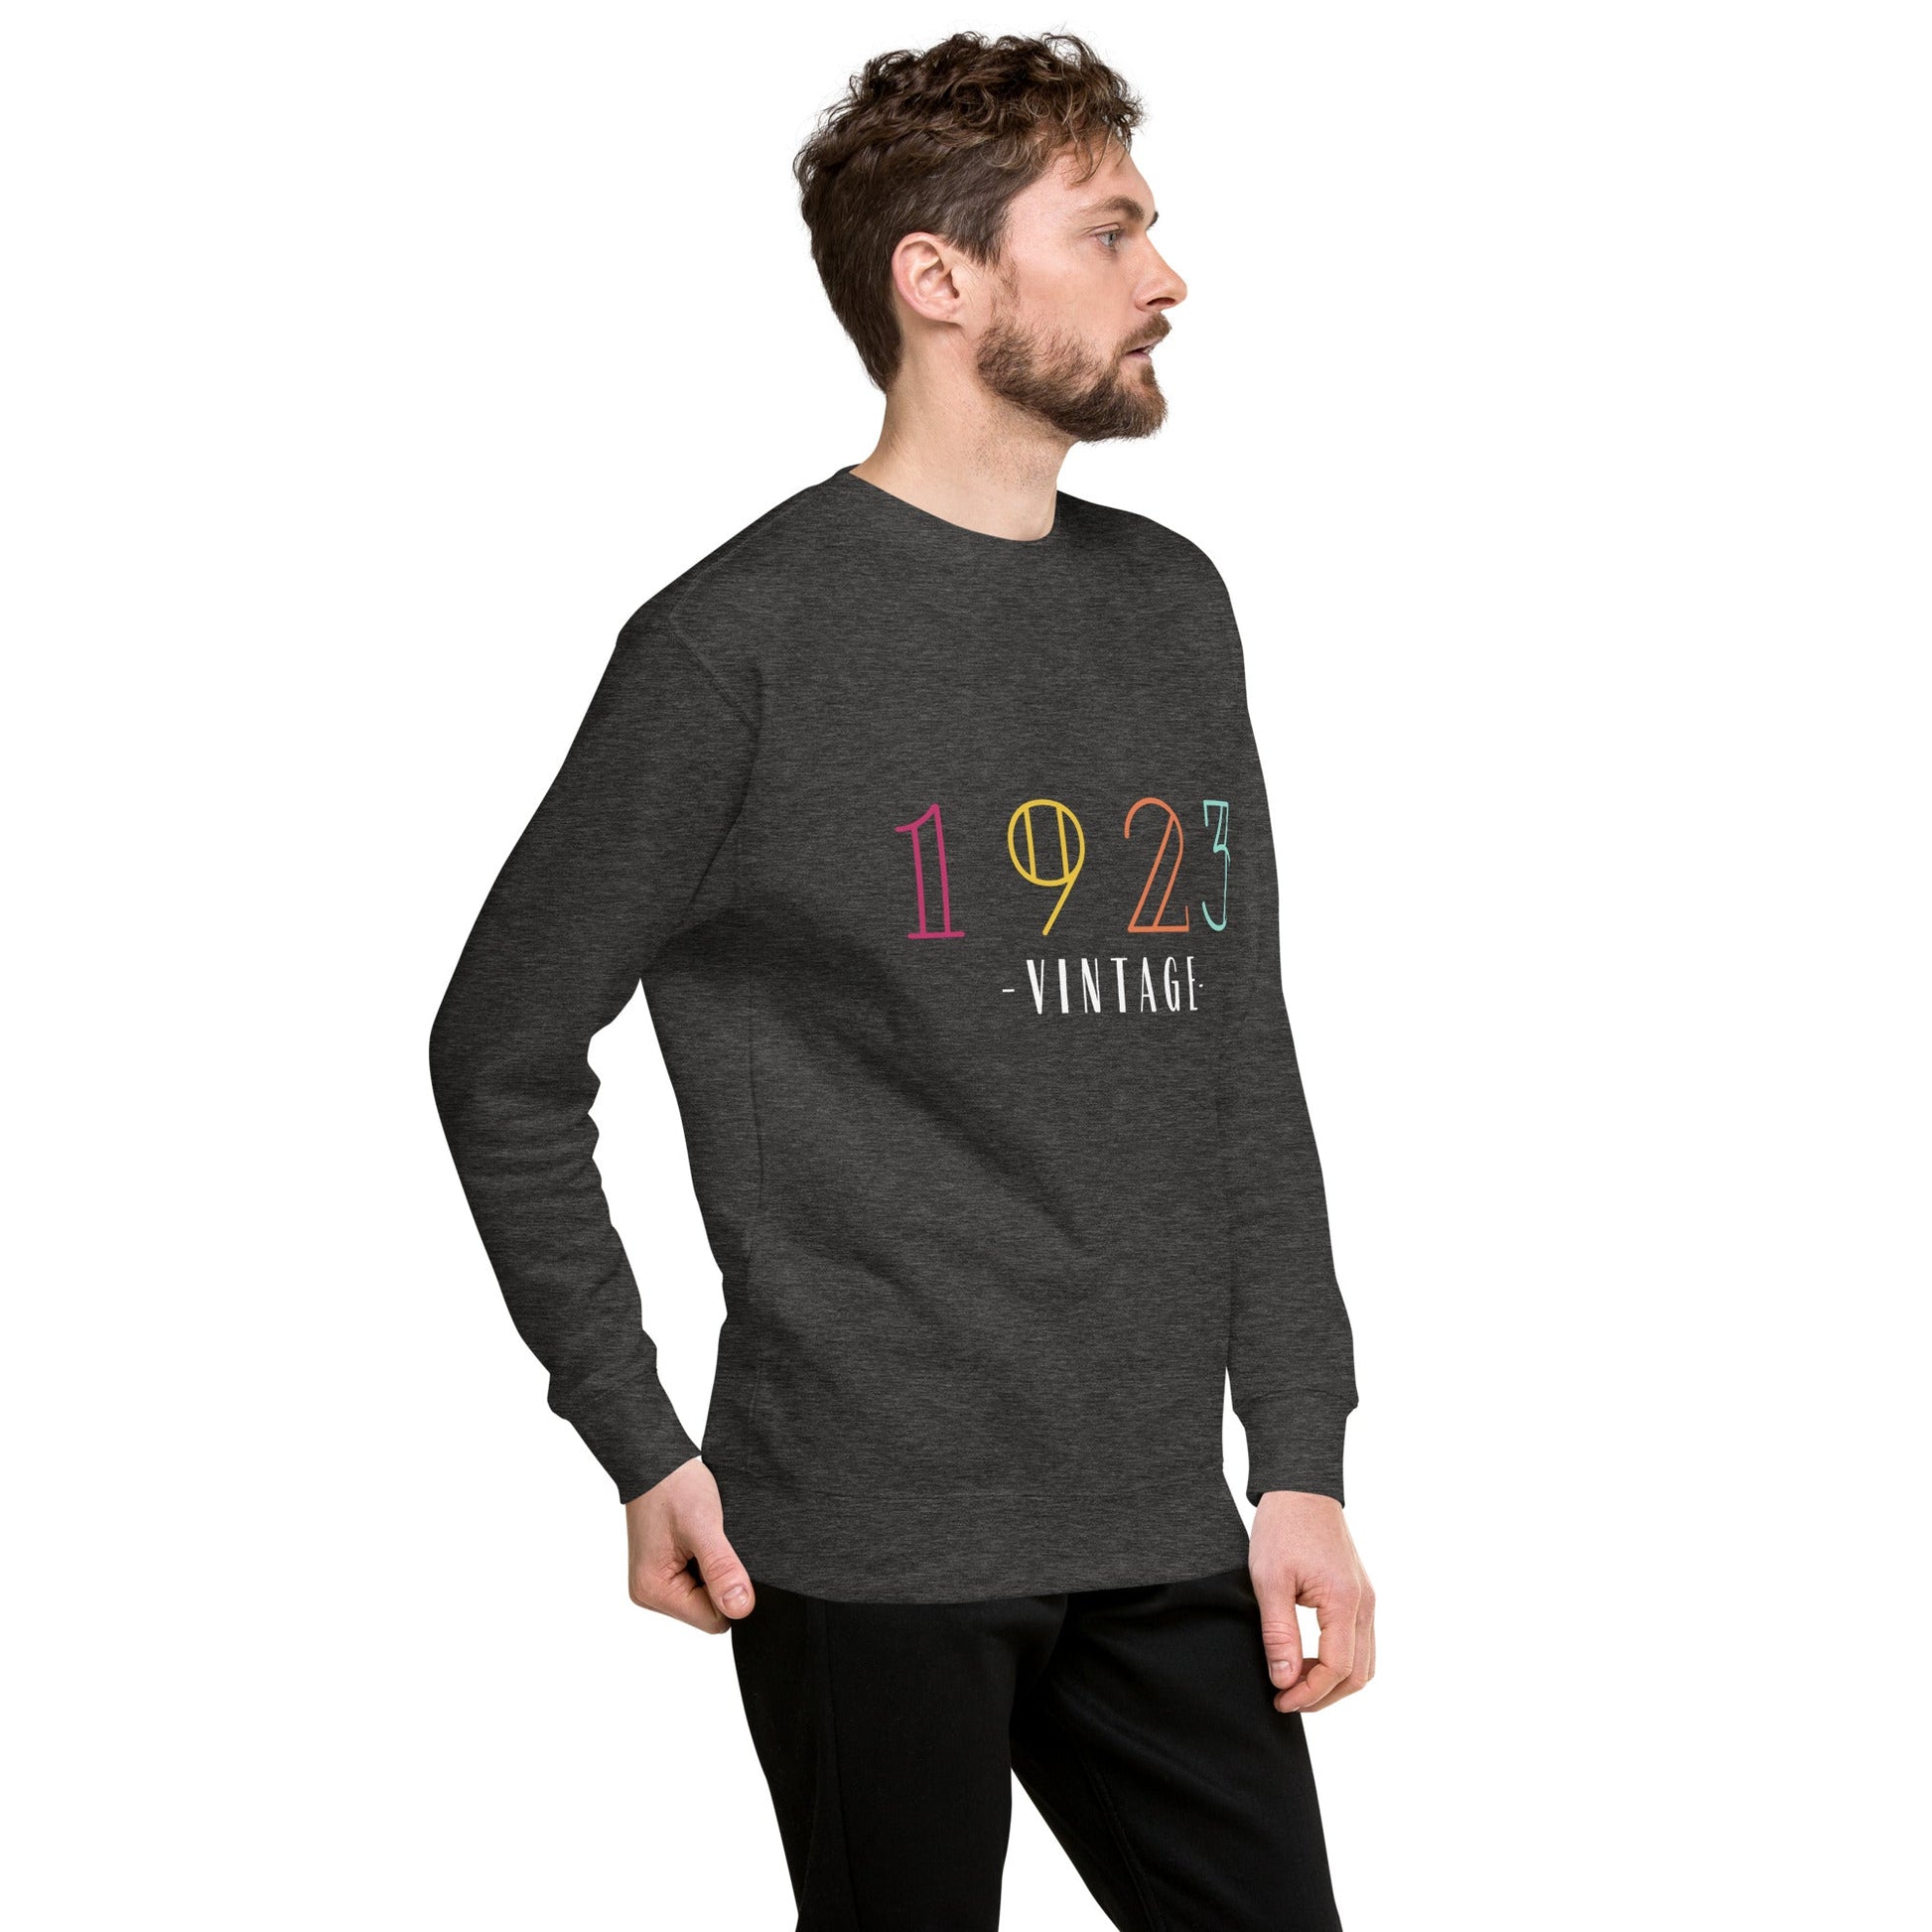 100 Year Vintage Unisex Premium Sweatshirt 100 years of wonderdisney sweatshirtsdisney trip#tag4##tag5##tag6#